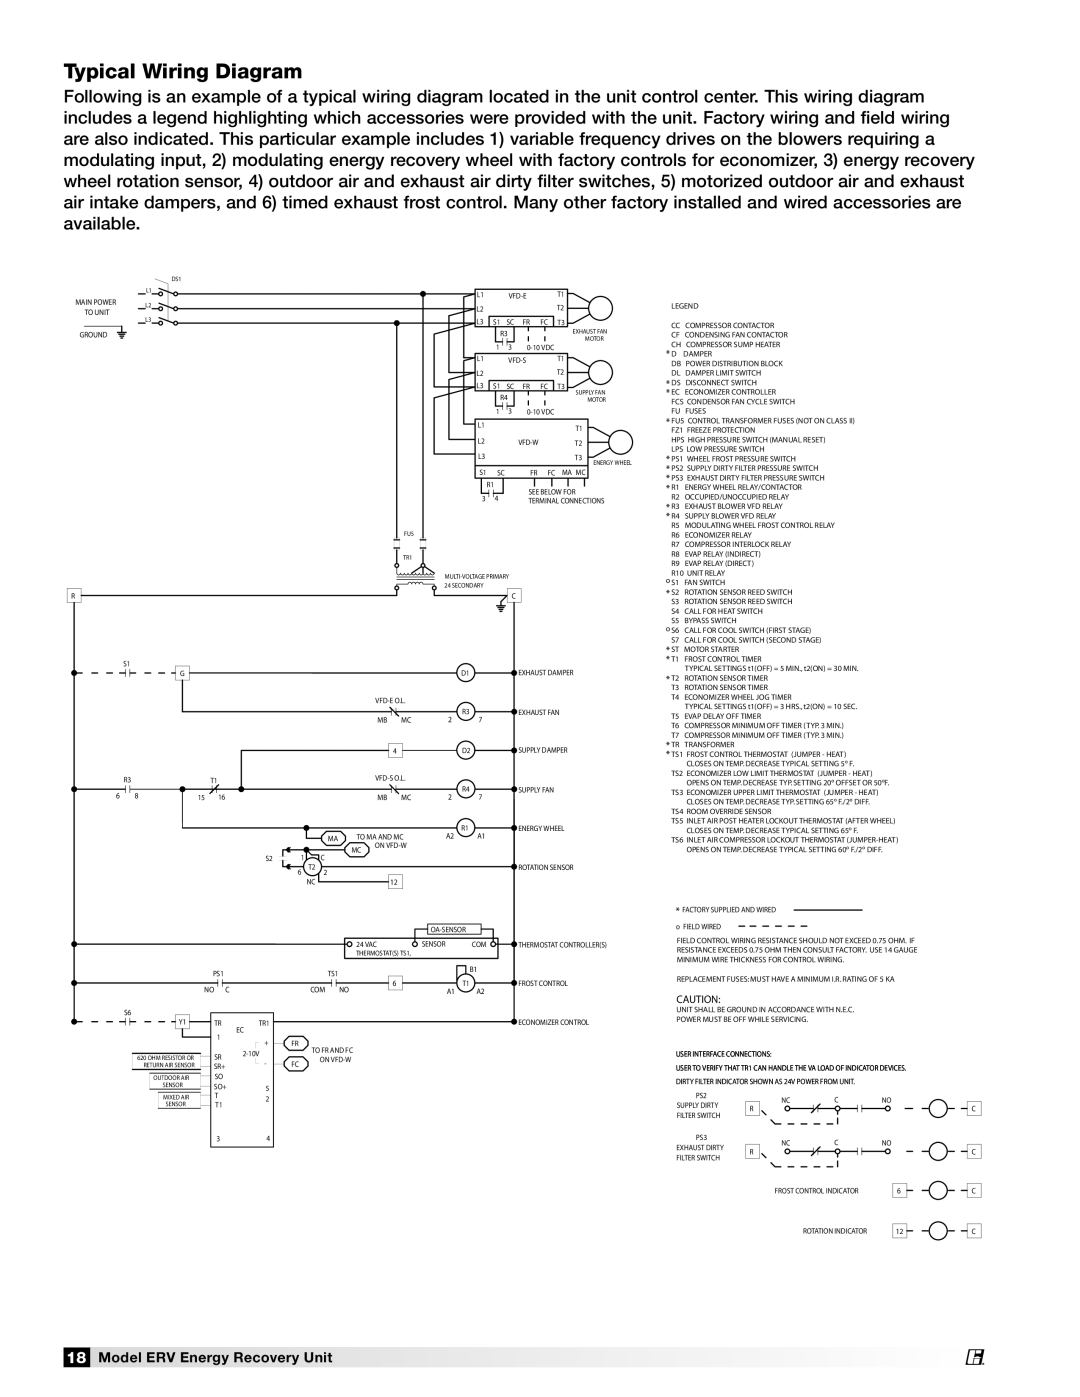 Greenheck Fan ERV-581, ERV-522, ERV-582, ERV-521, ERV-251, ERV-361 manual Typical Wiring Diagram, Model ERV Energy Recovery Unit 